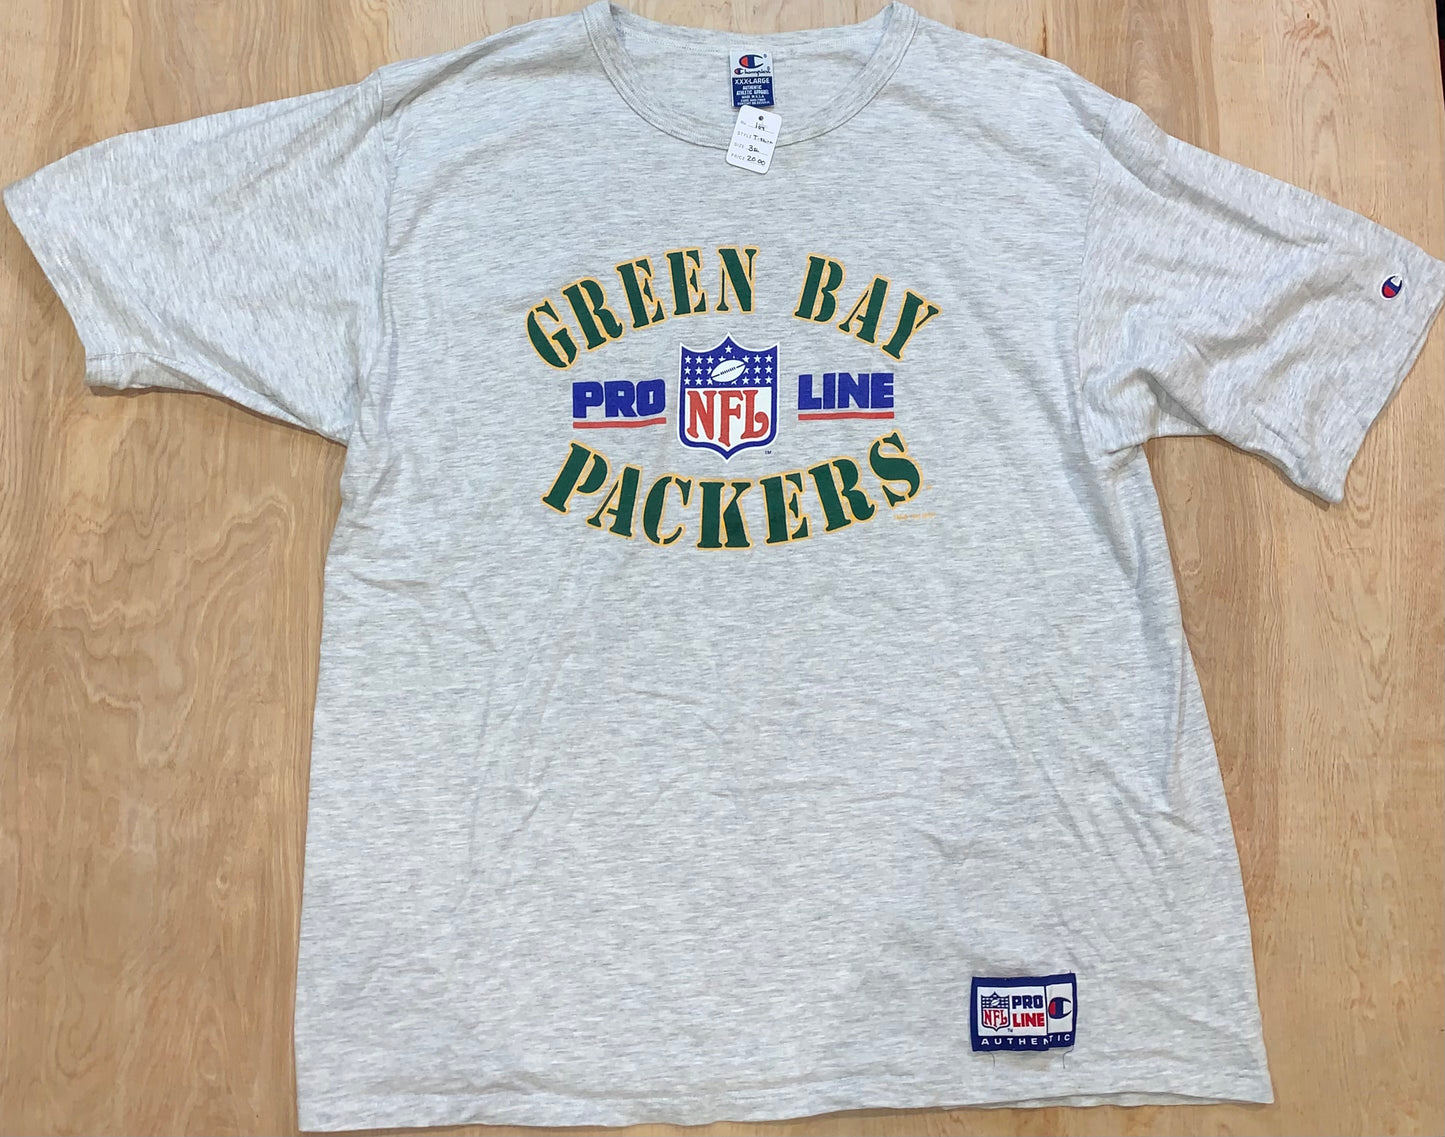 1994 Champion Pro line Packers T-shirt